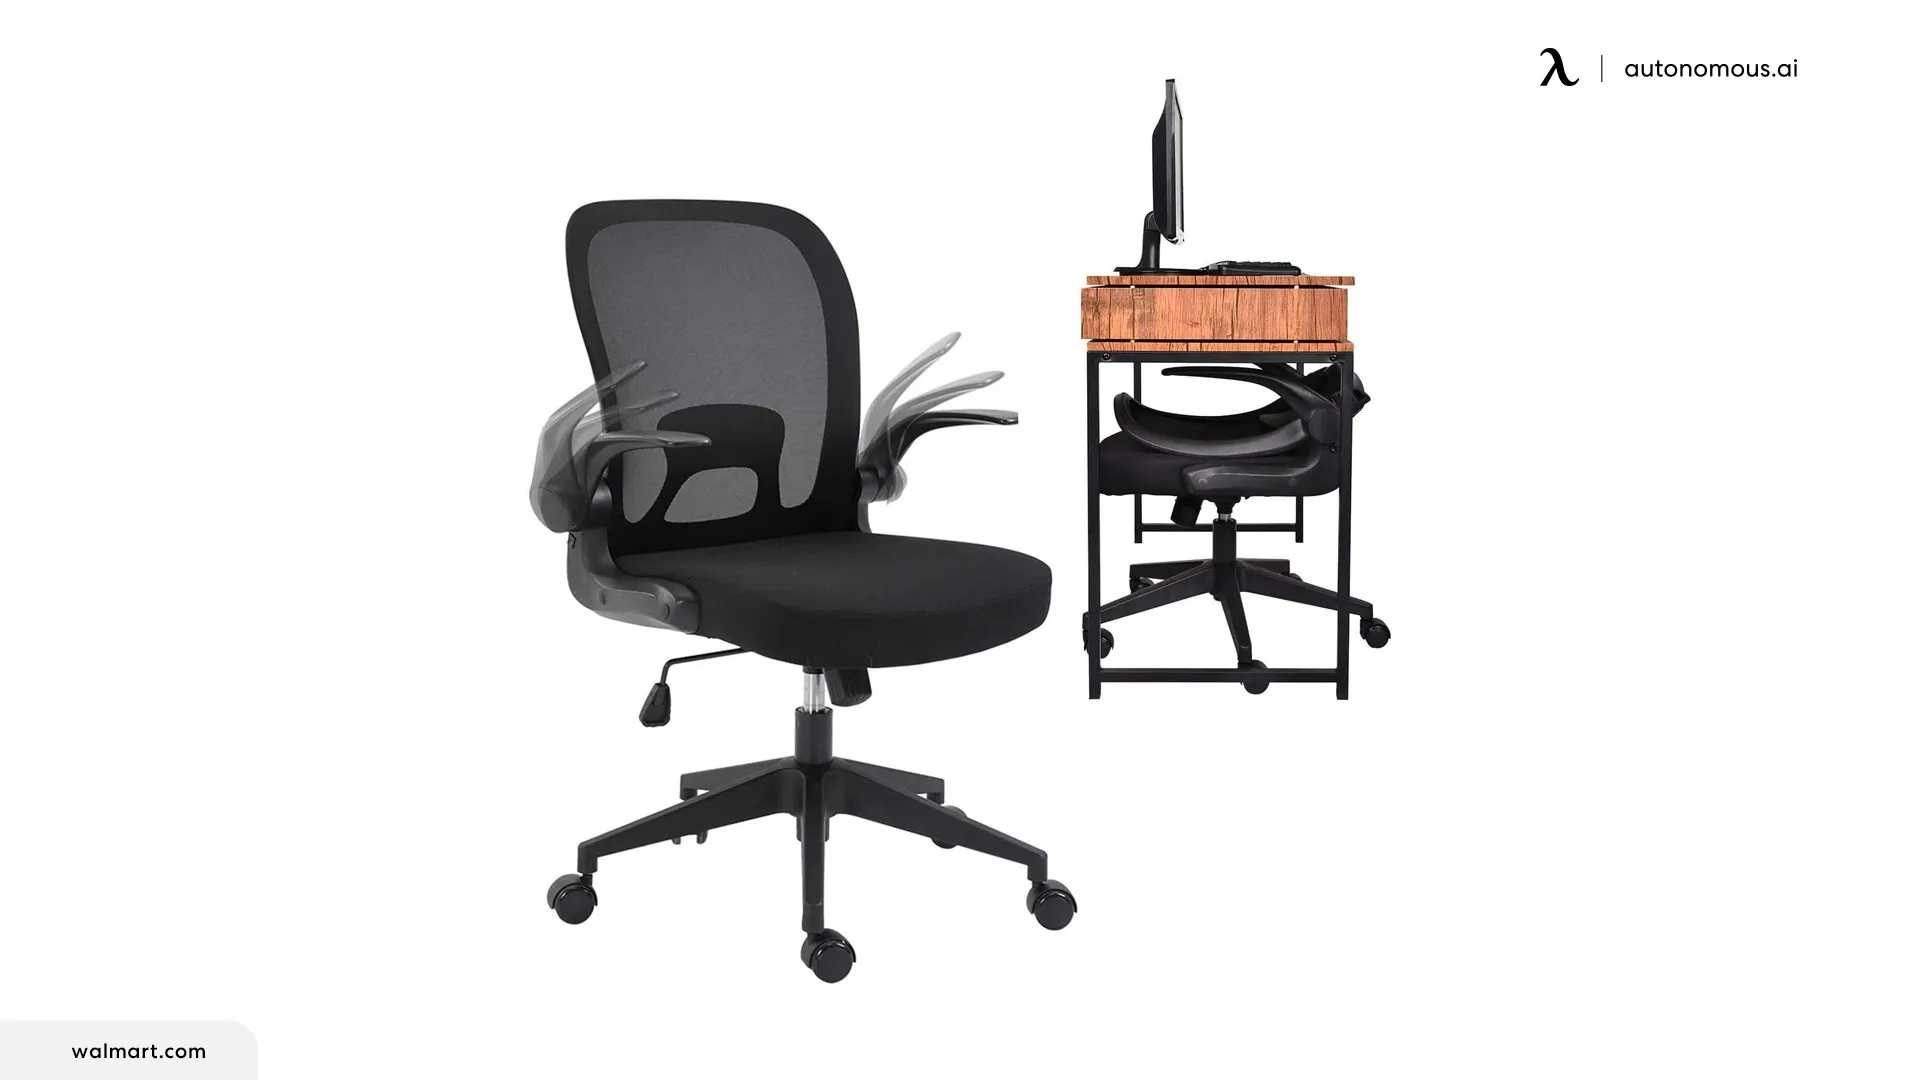 IPKIG Ergonomic Office Chair